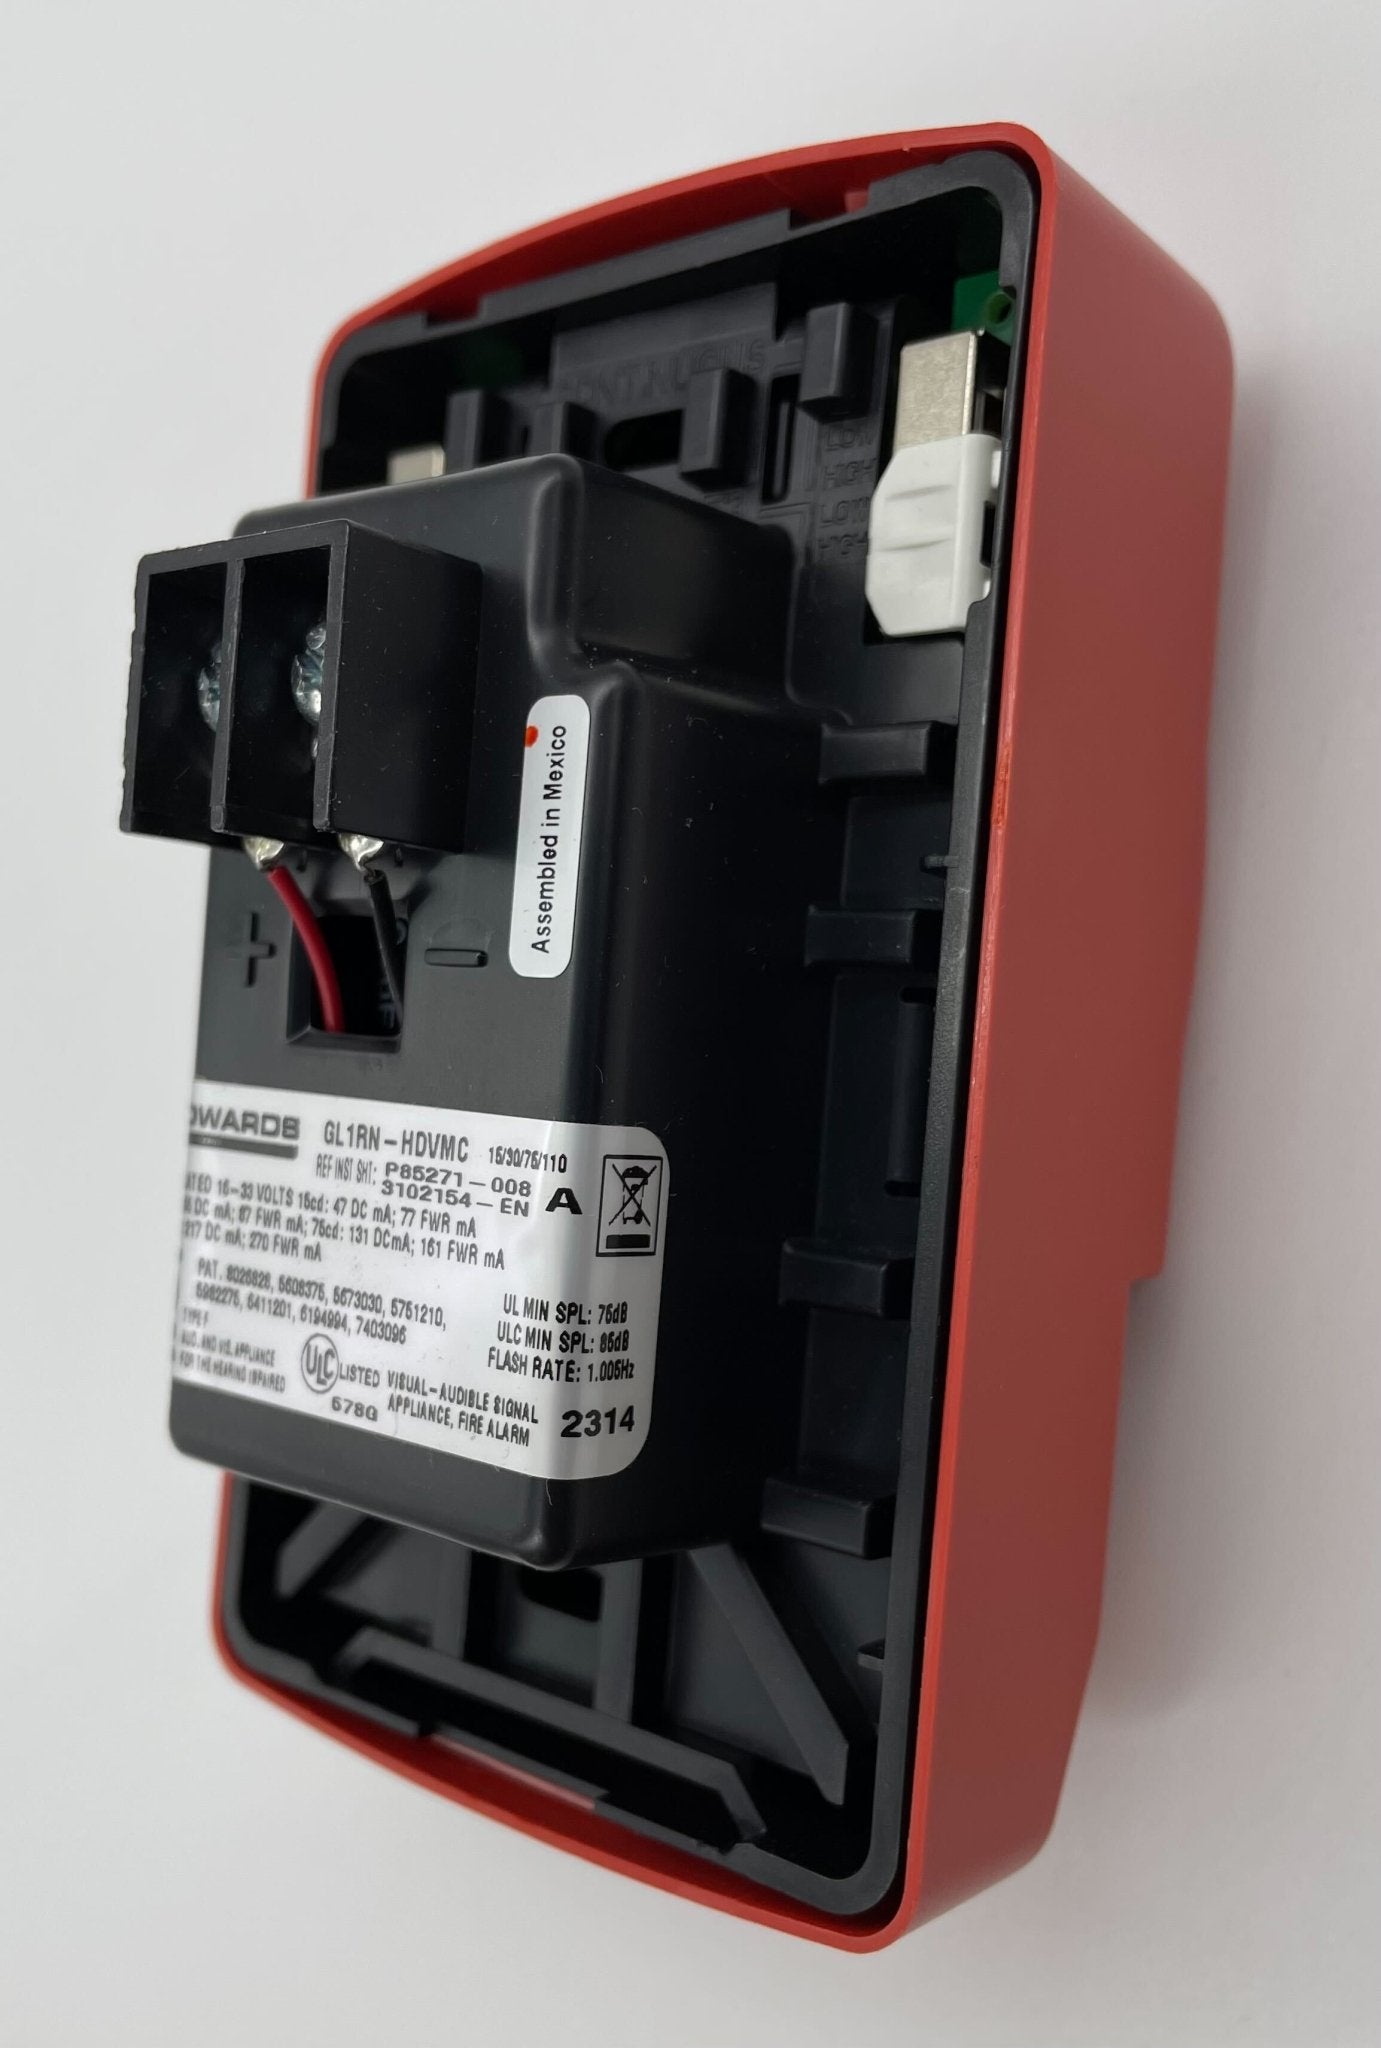 Edwards GL1RN-HDVMC - The Fire Alarm Supplier